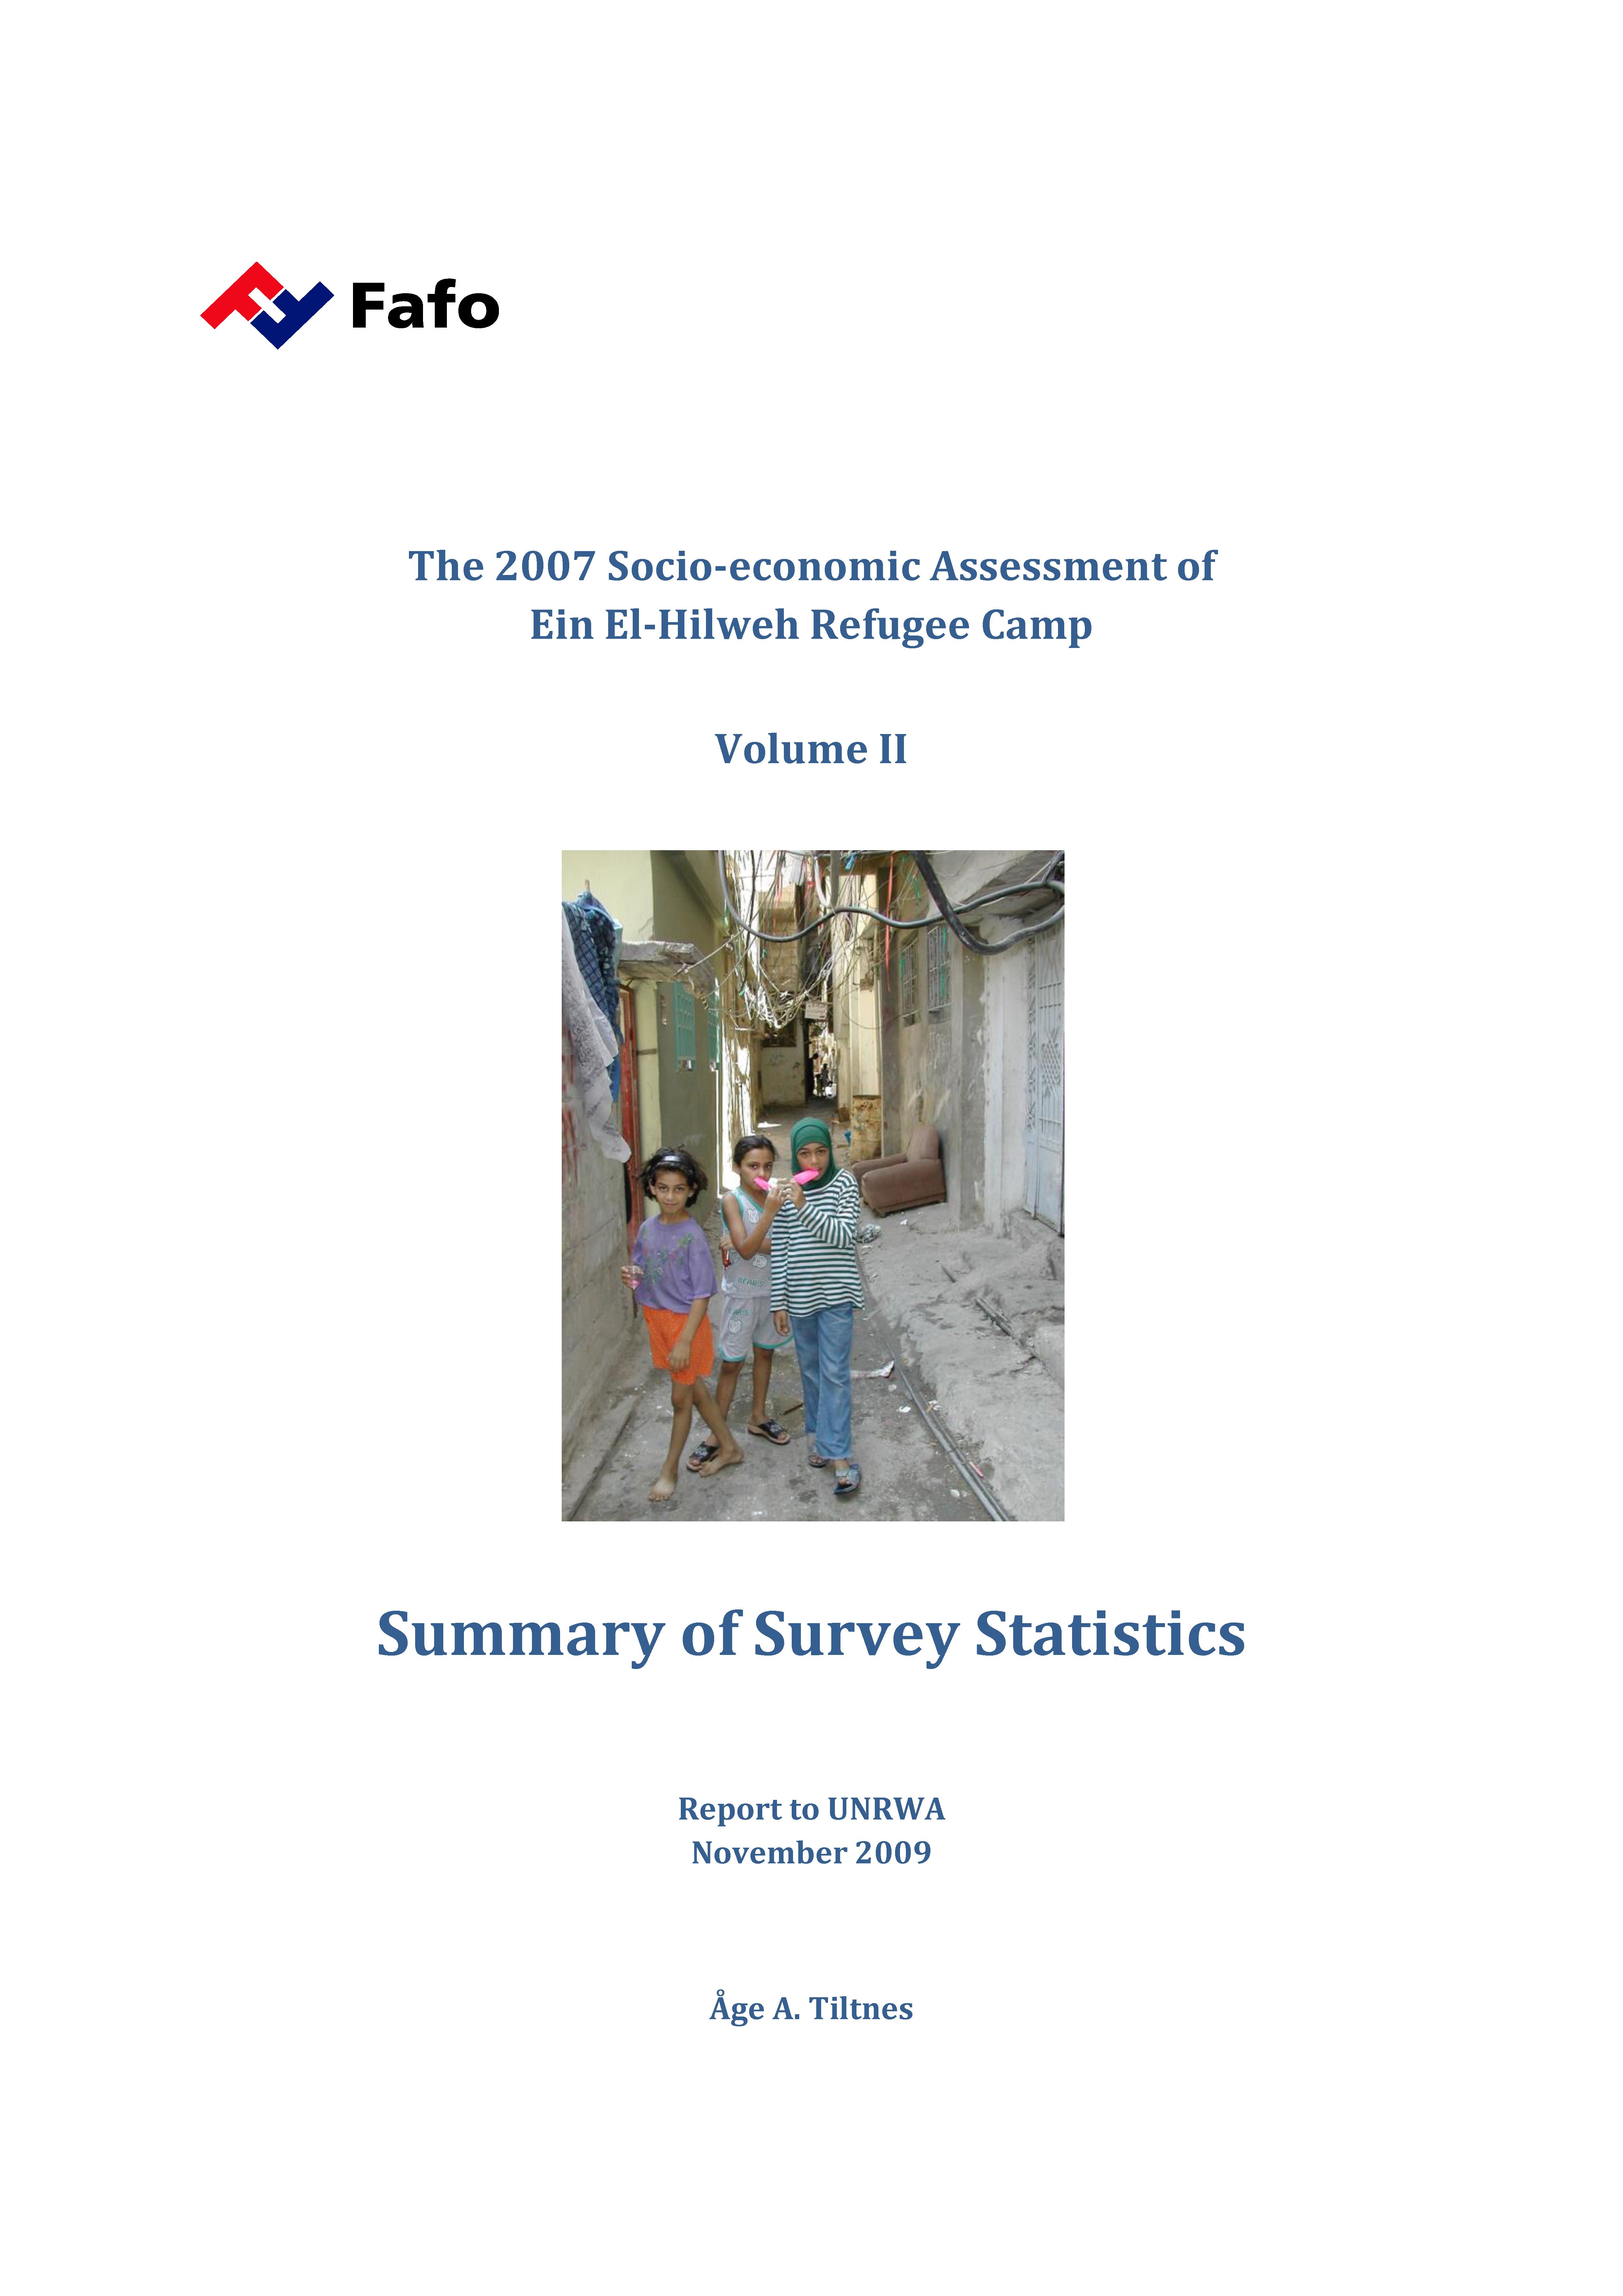 The 2007 Socio-economic Assessment of Ein El-Hilweh Refugee Camp.  Volume II